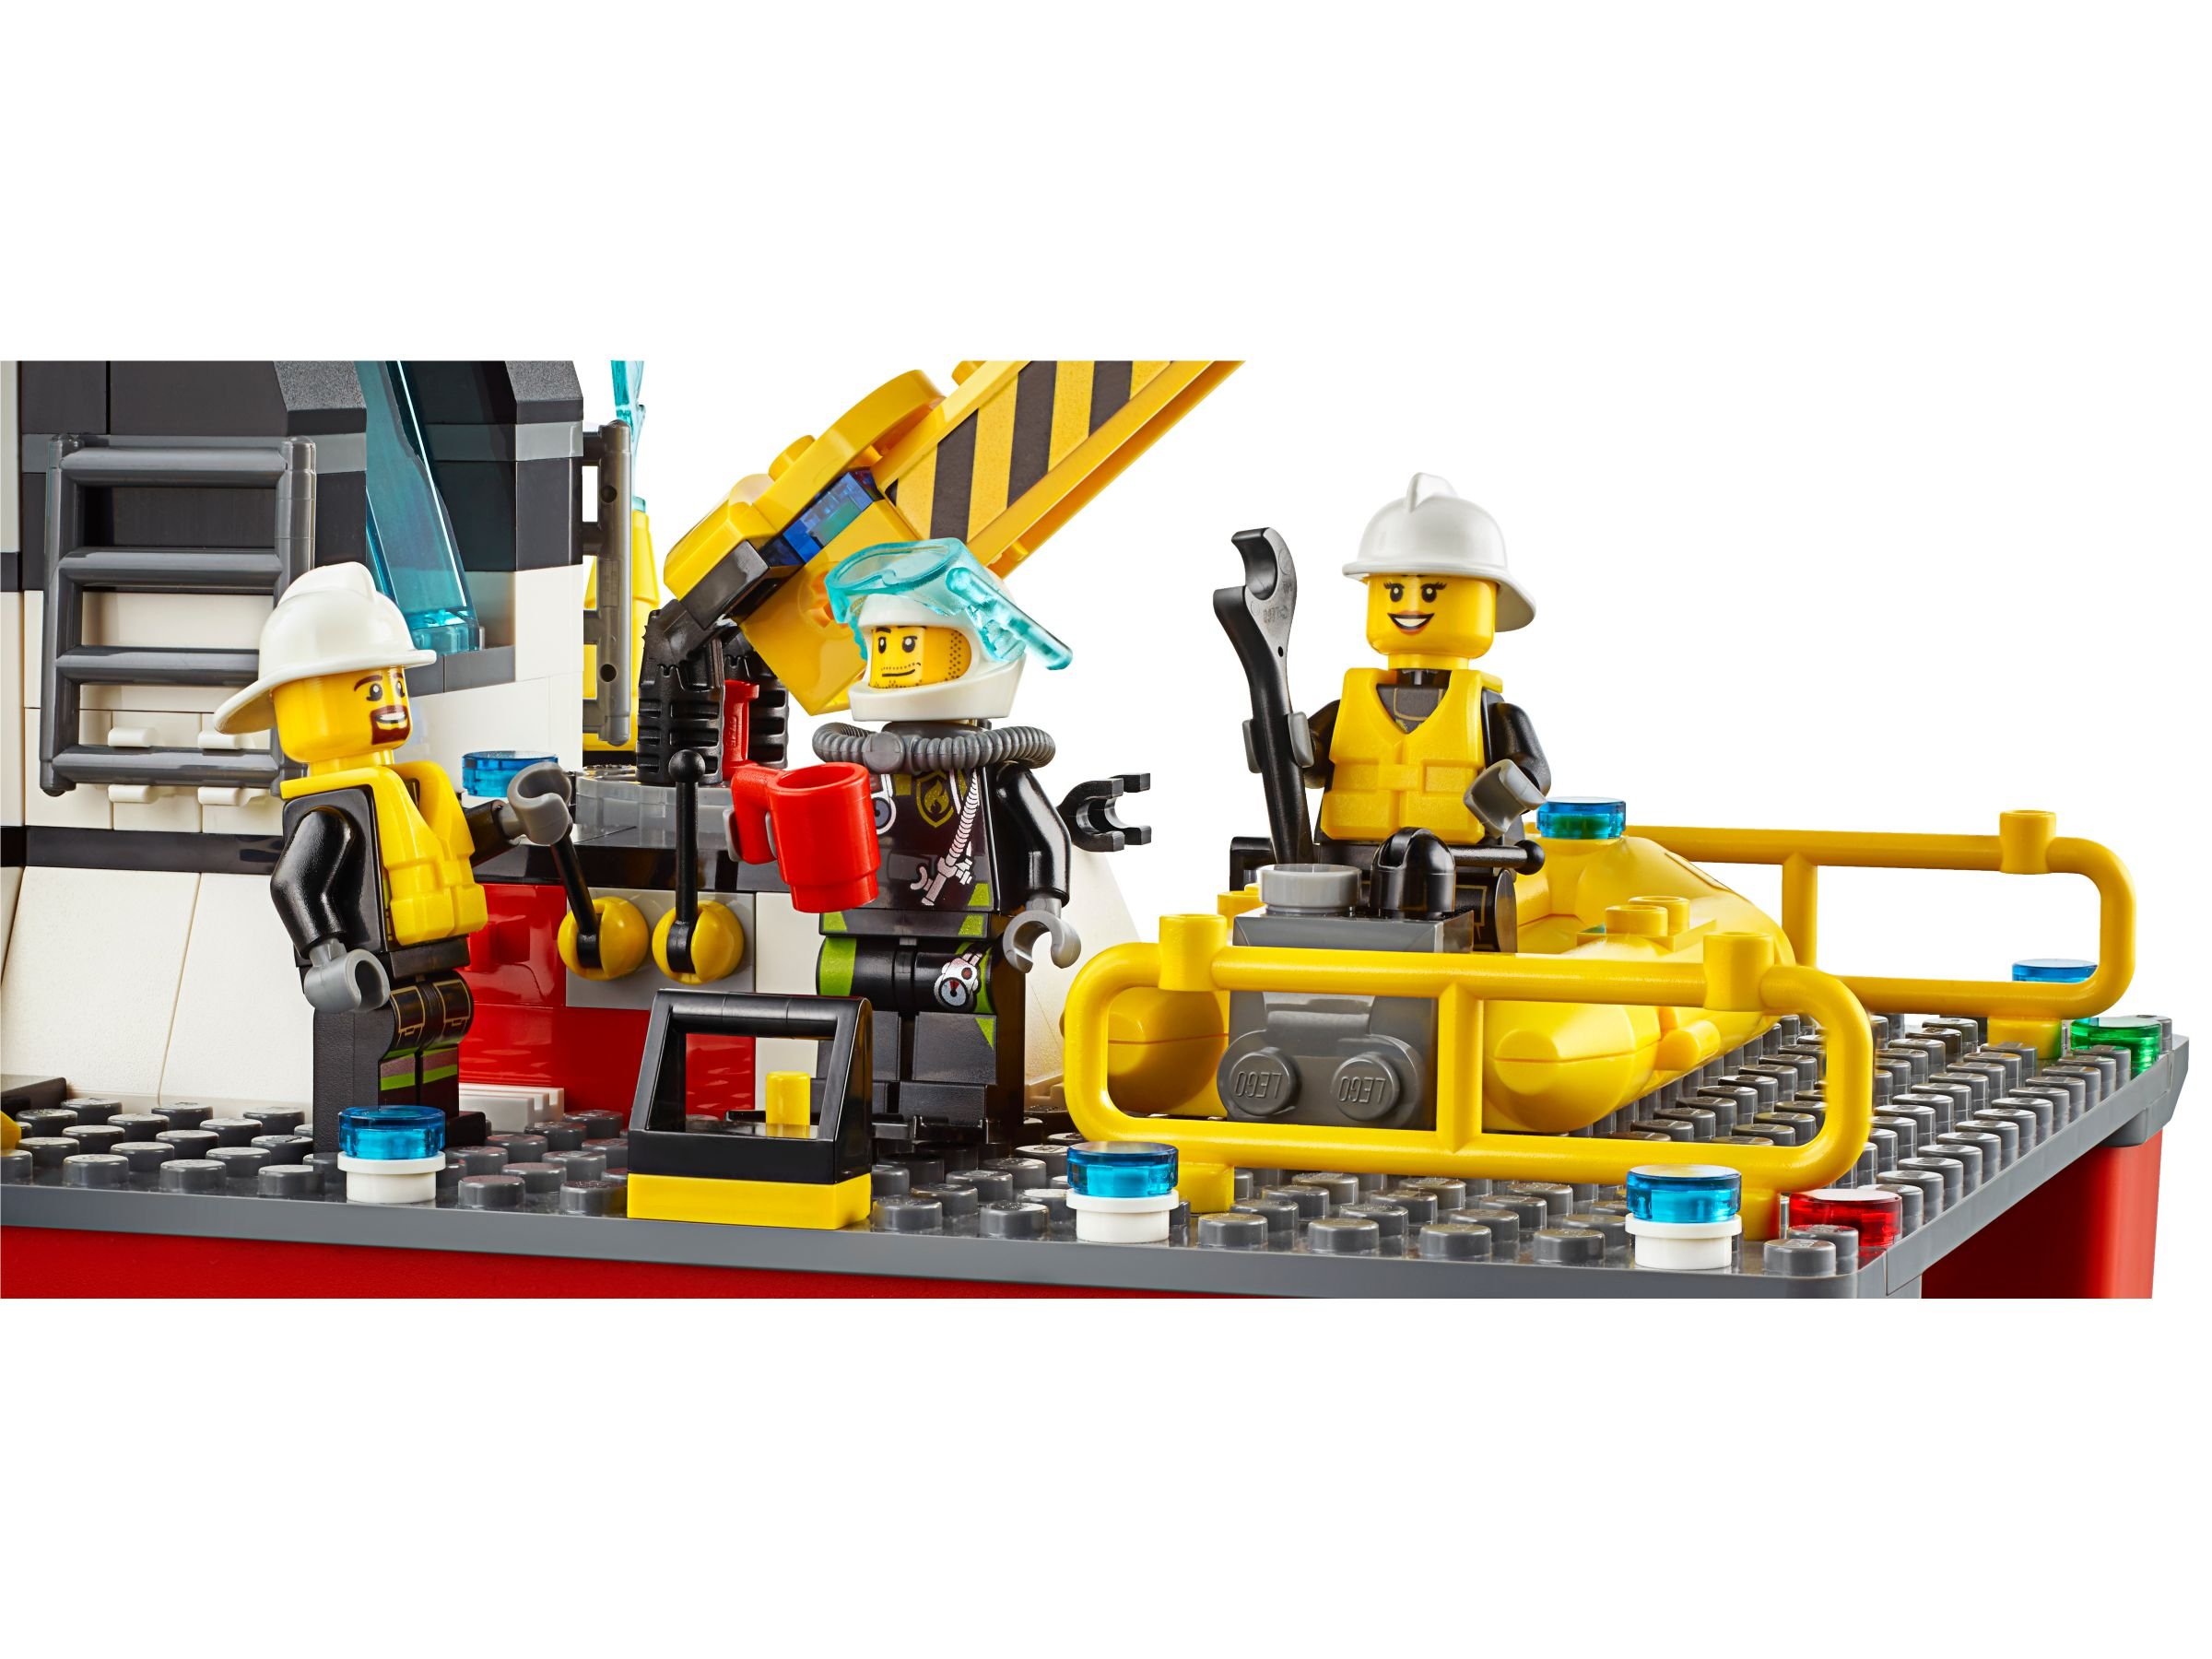 LEGO City 60109 Feuerwehrschiff LEGO_60109_alt6.jpg